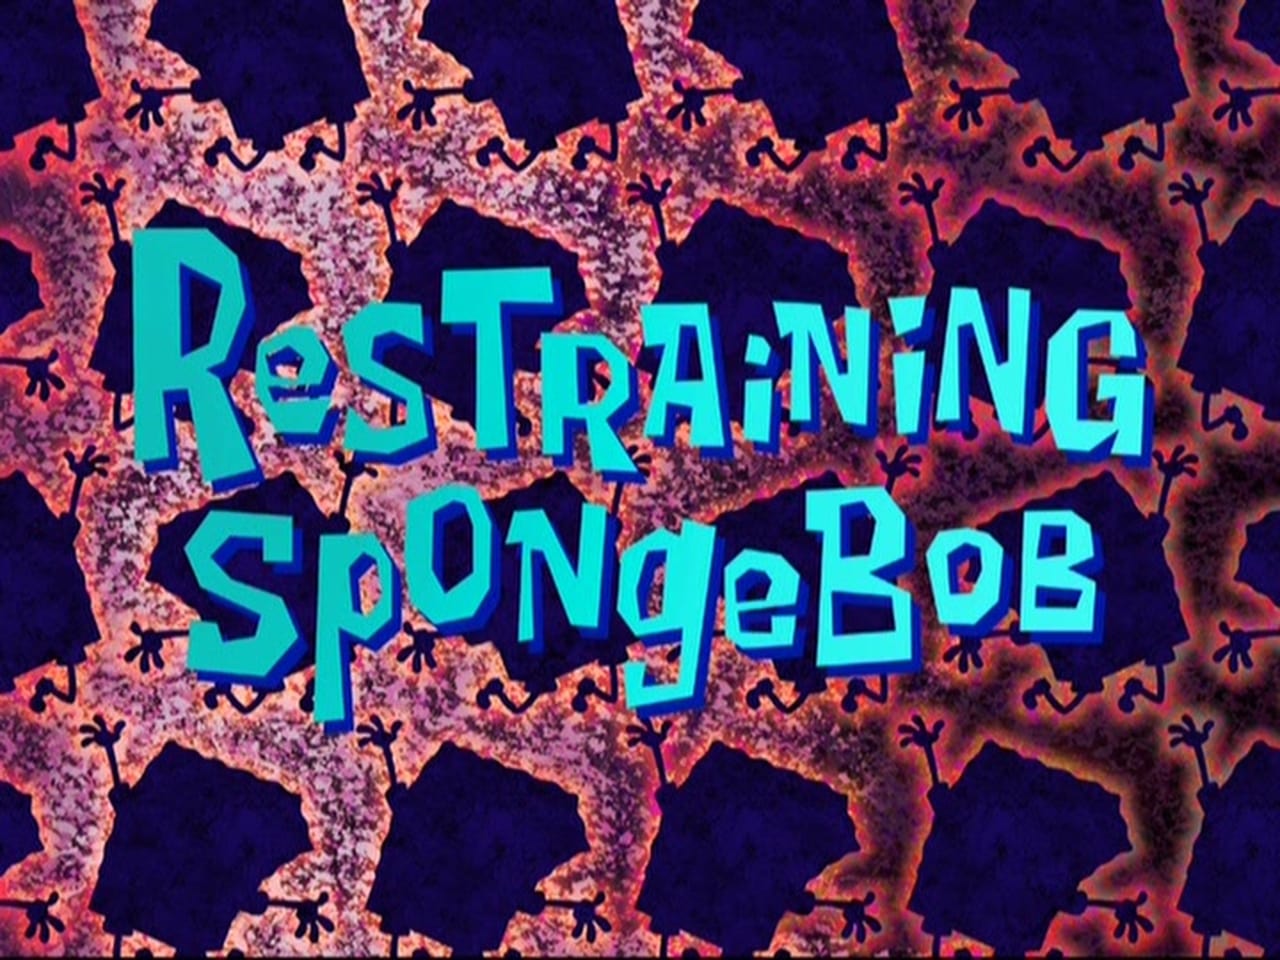 SpongeBob SquarePants - Season 8 Episode 31 : Restraining SpongeBob